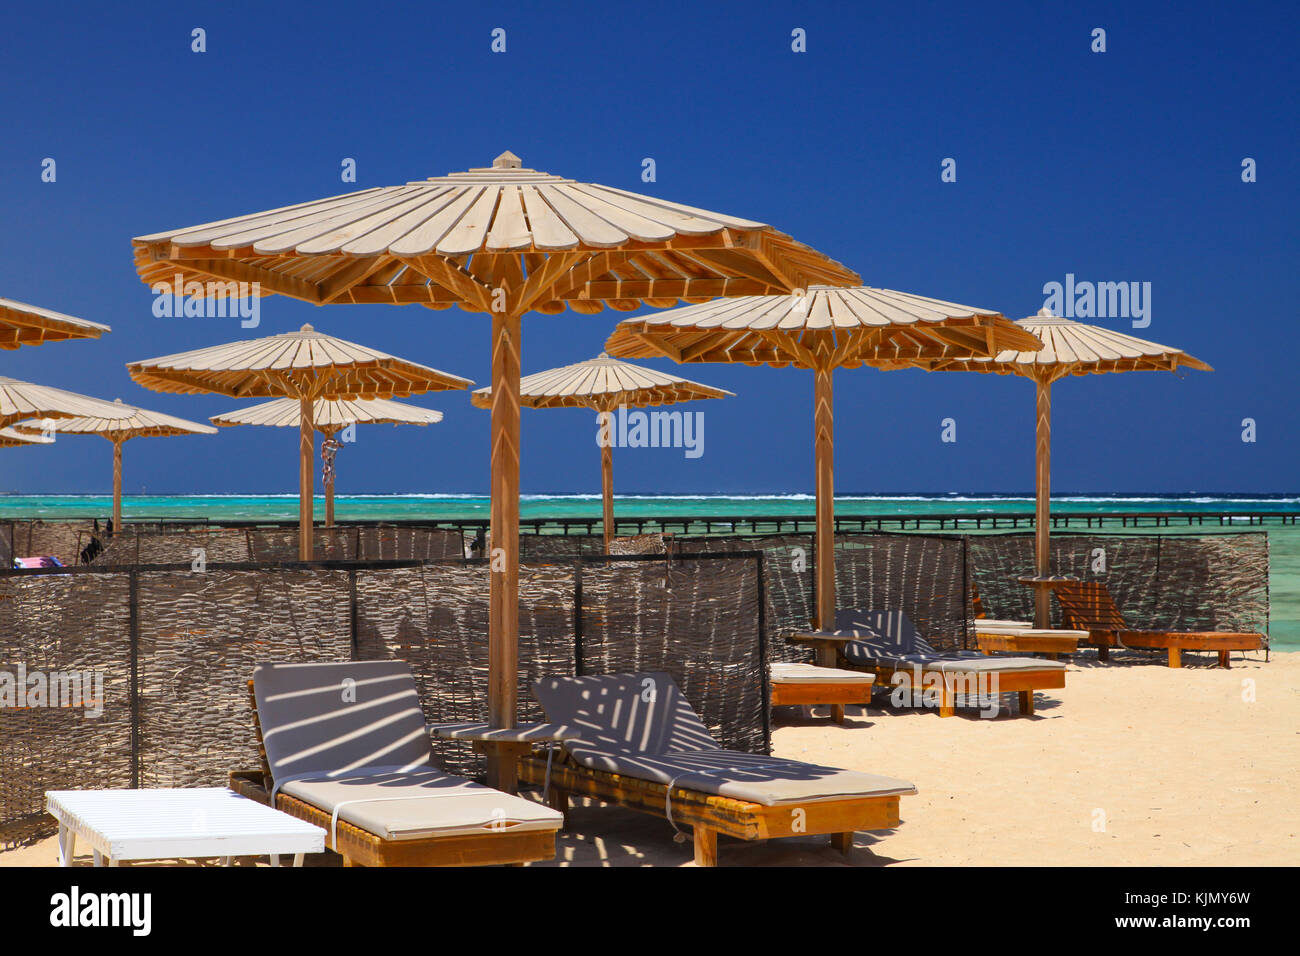 Ägyptische Sonnenschirm am Strand des Roten Meeres. Marsa Alam, Ägypten. Stockfoto